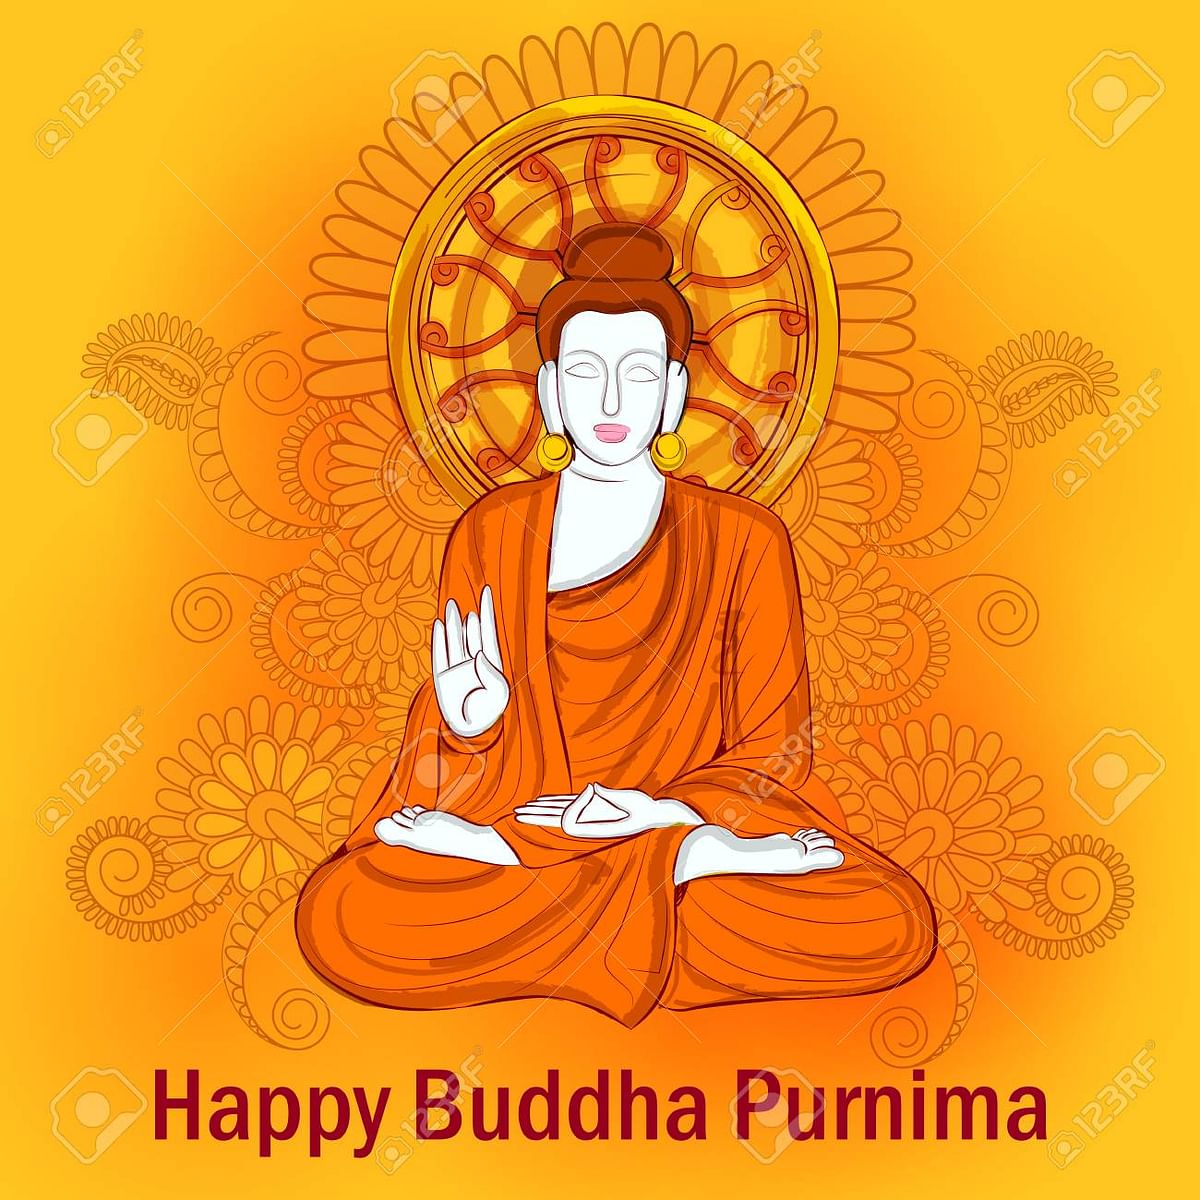 This year Buddha Purnima will be celebrated on 26 May 2021.